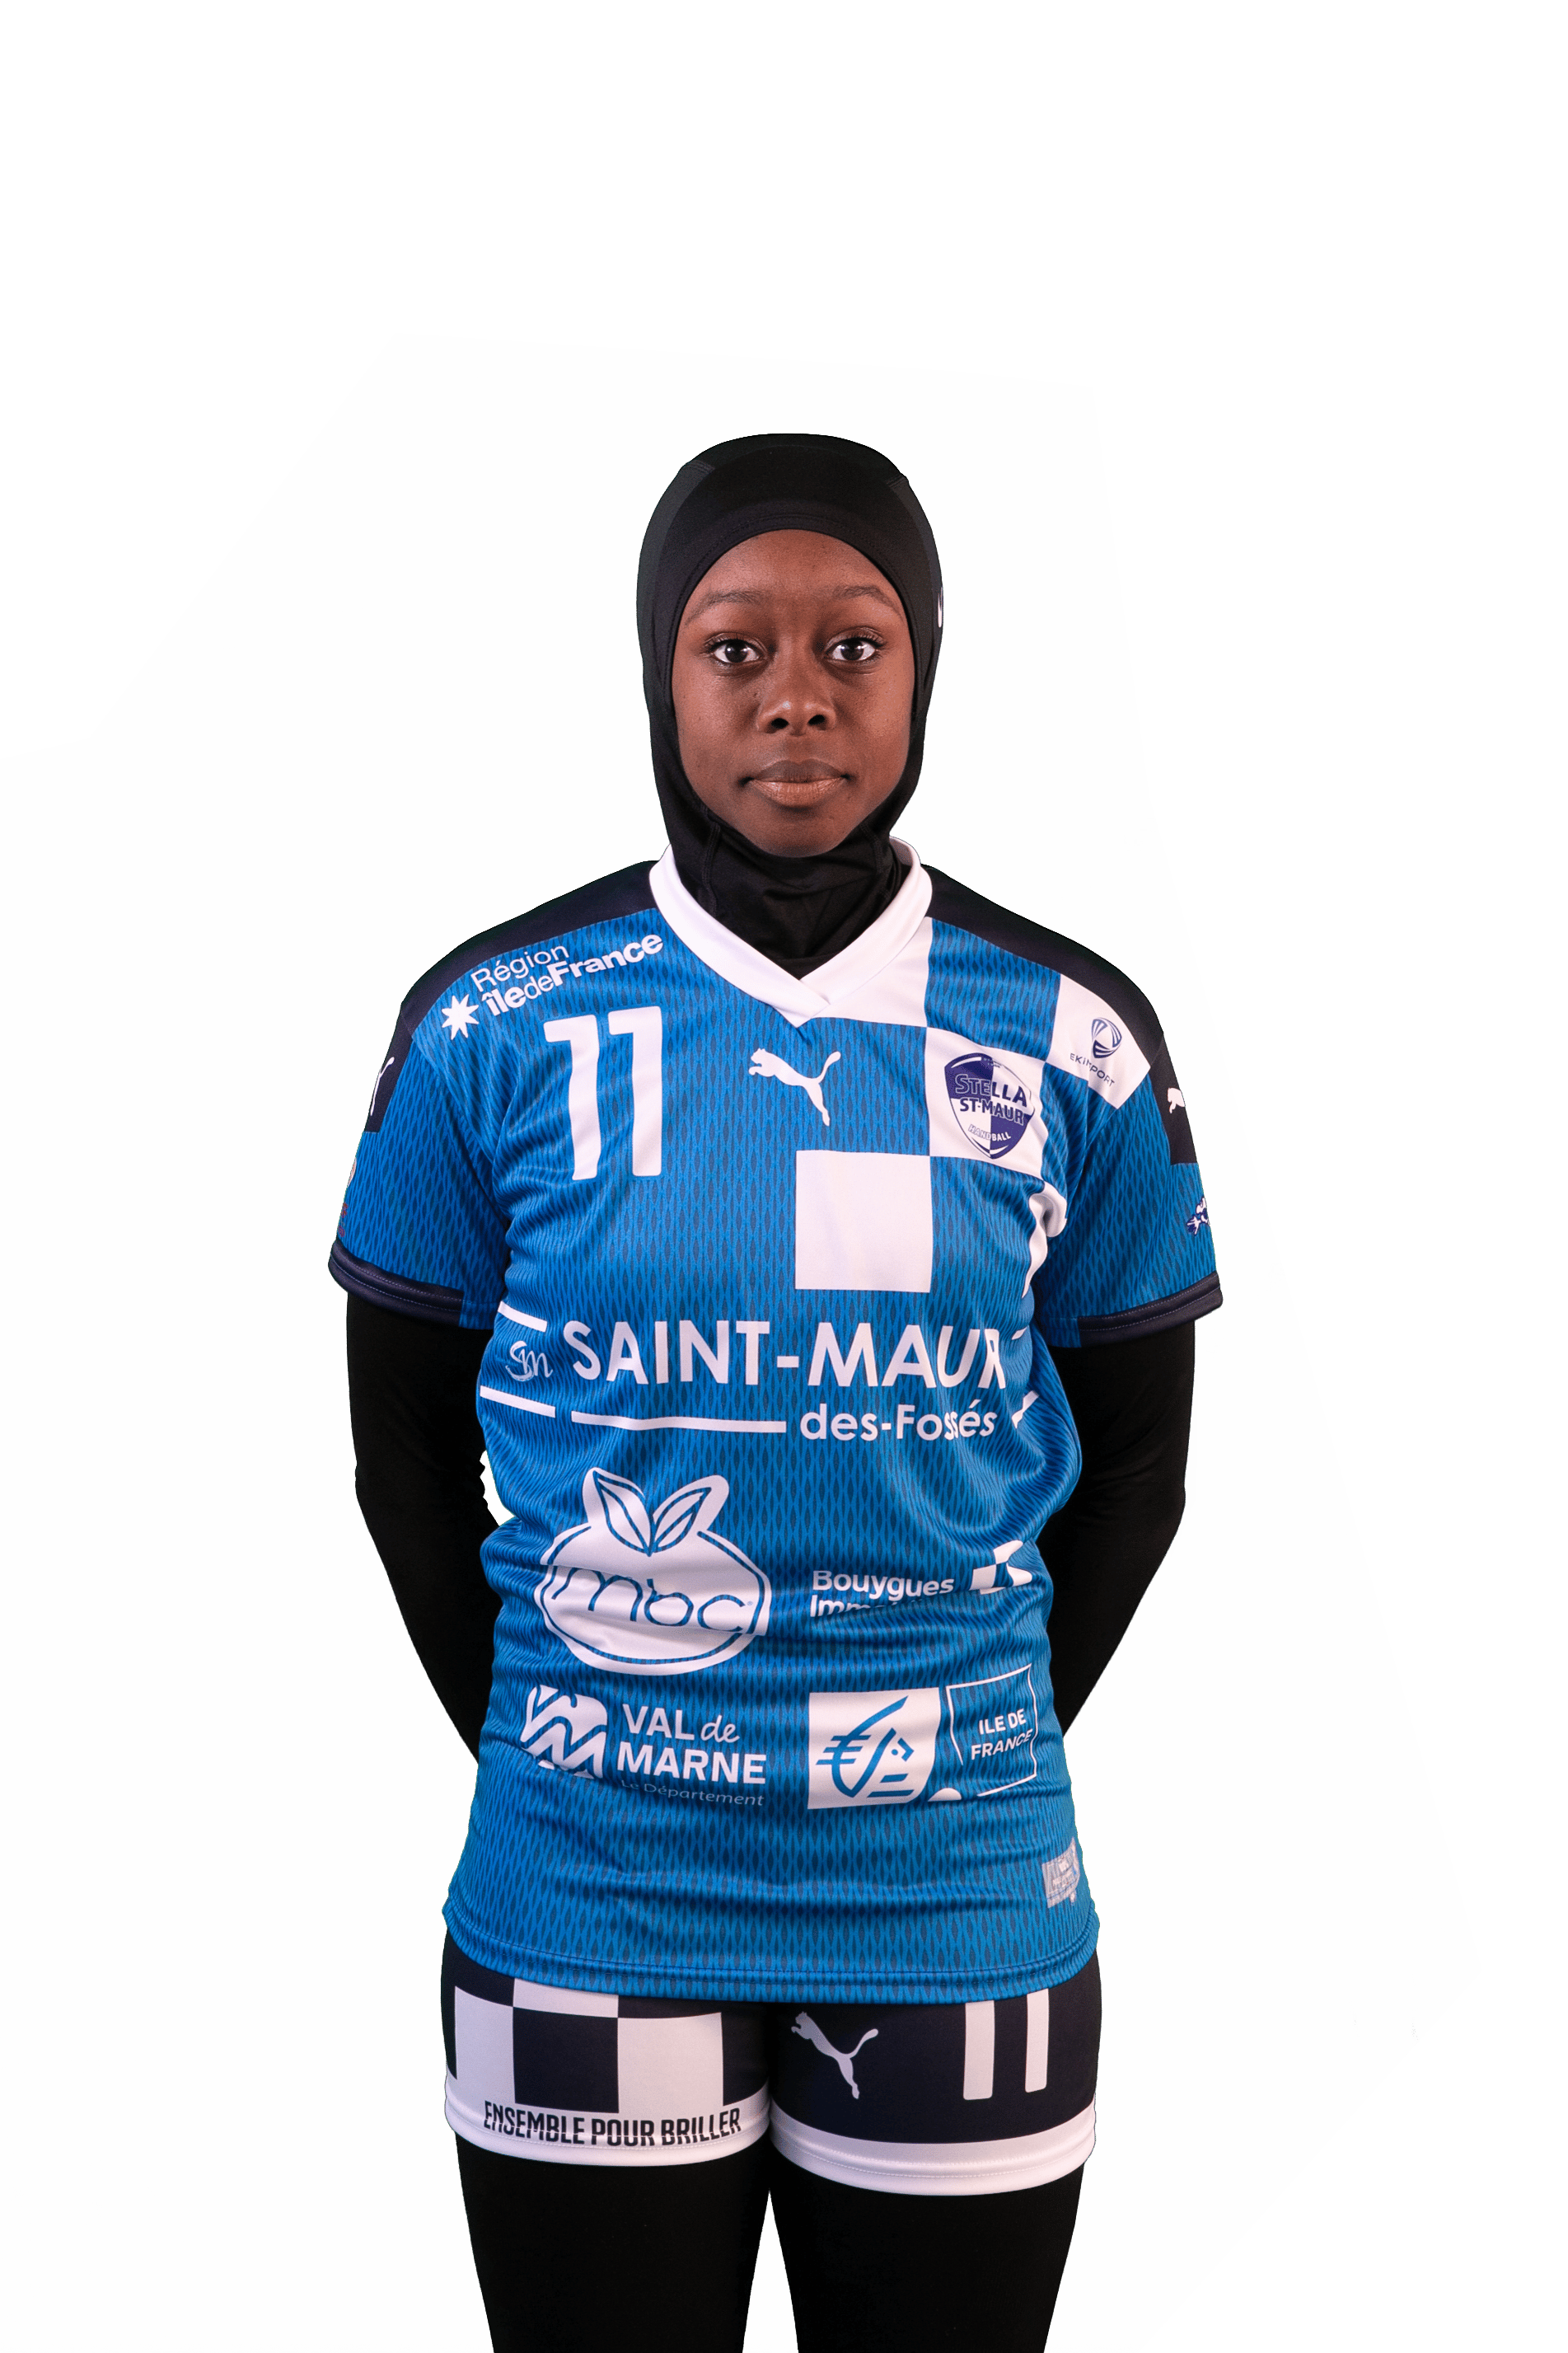 djeneba-tandjan - Capitaine -  Ailière gauche division 2 féminine de handball de Stella St-Maur Handball